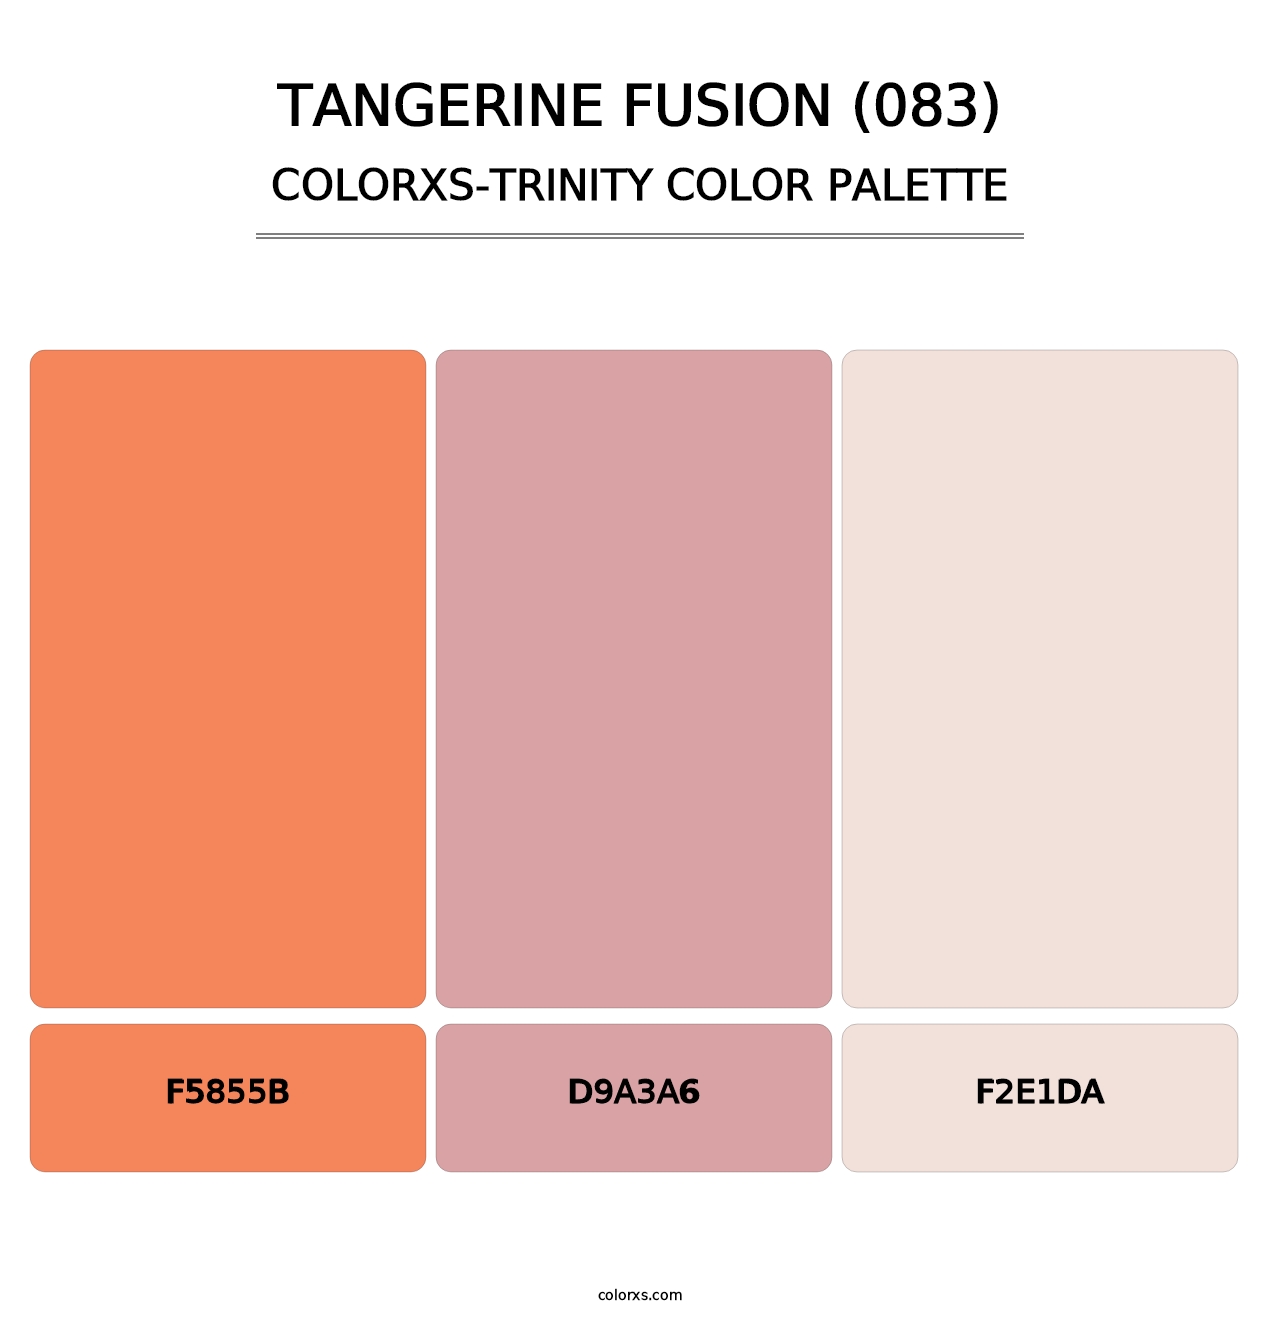 Tangerine Fusion (083) - Colorxs Trinity Palette